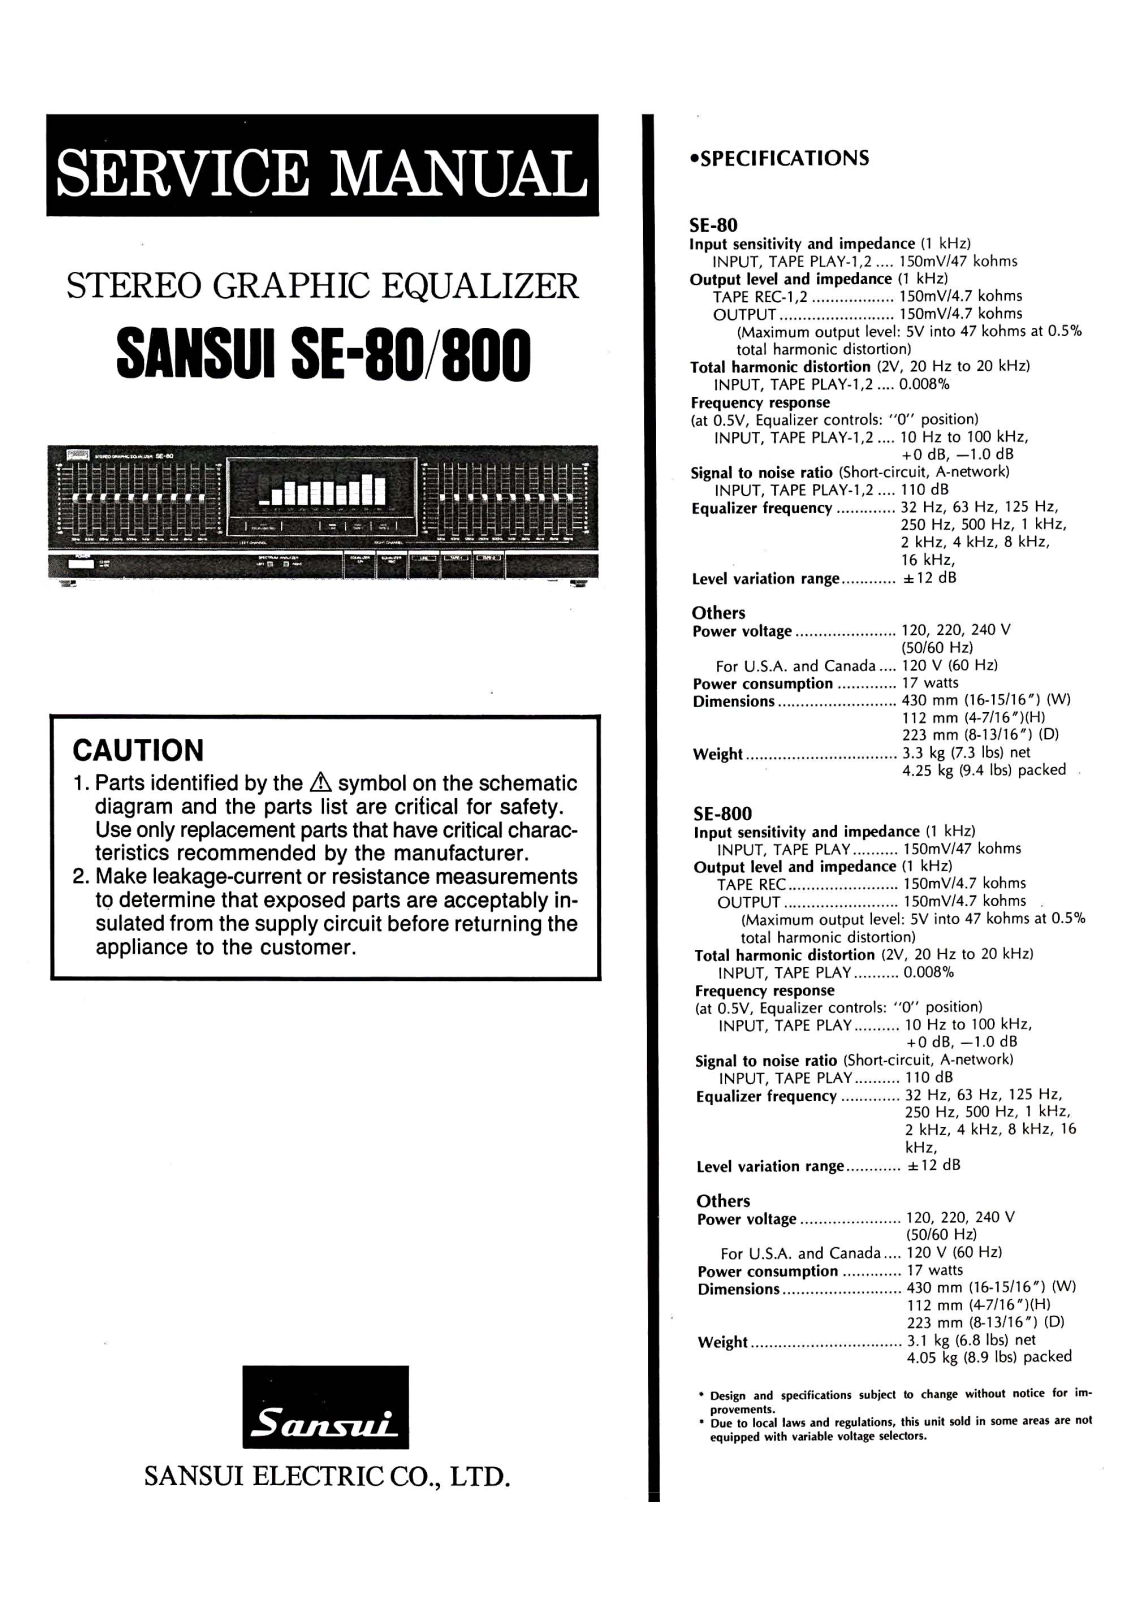 Sansui SE-800, SE-80 Service Manual